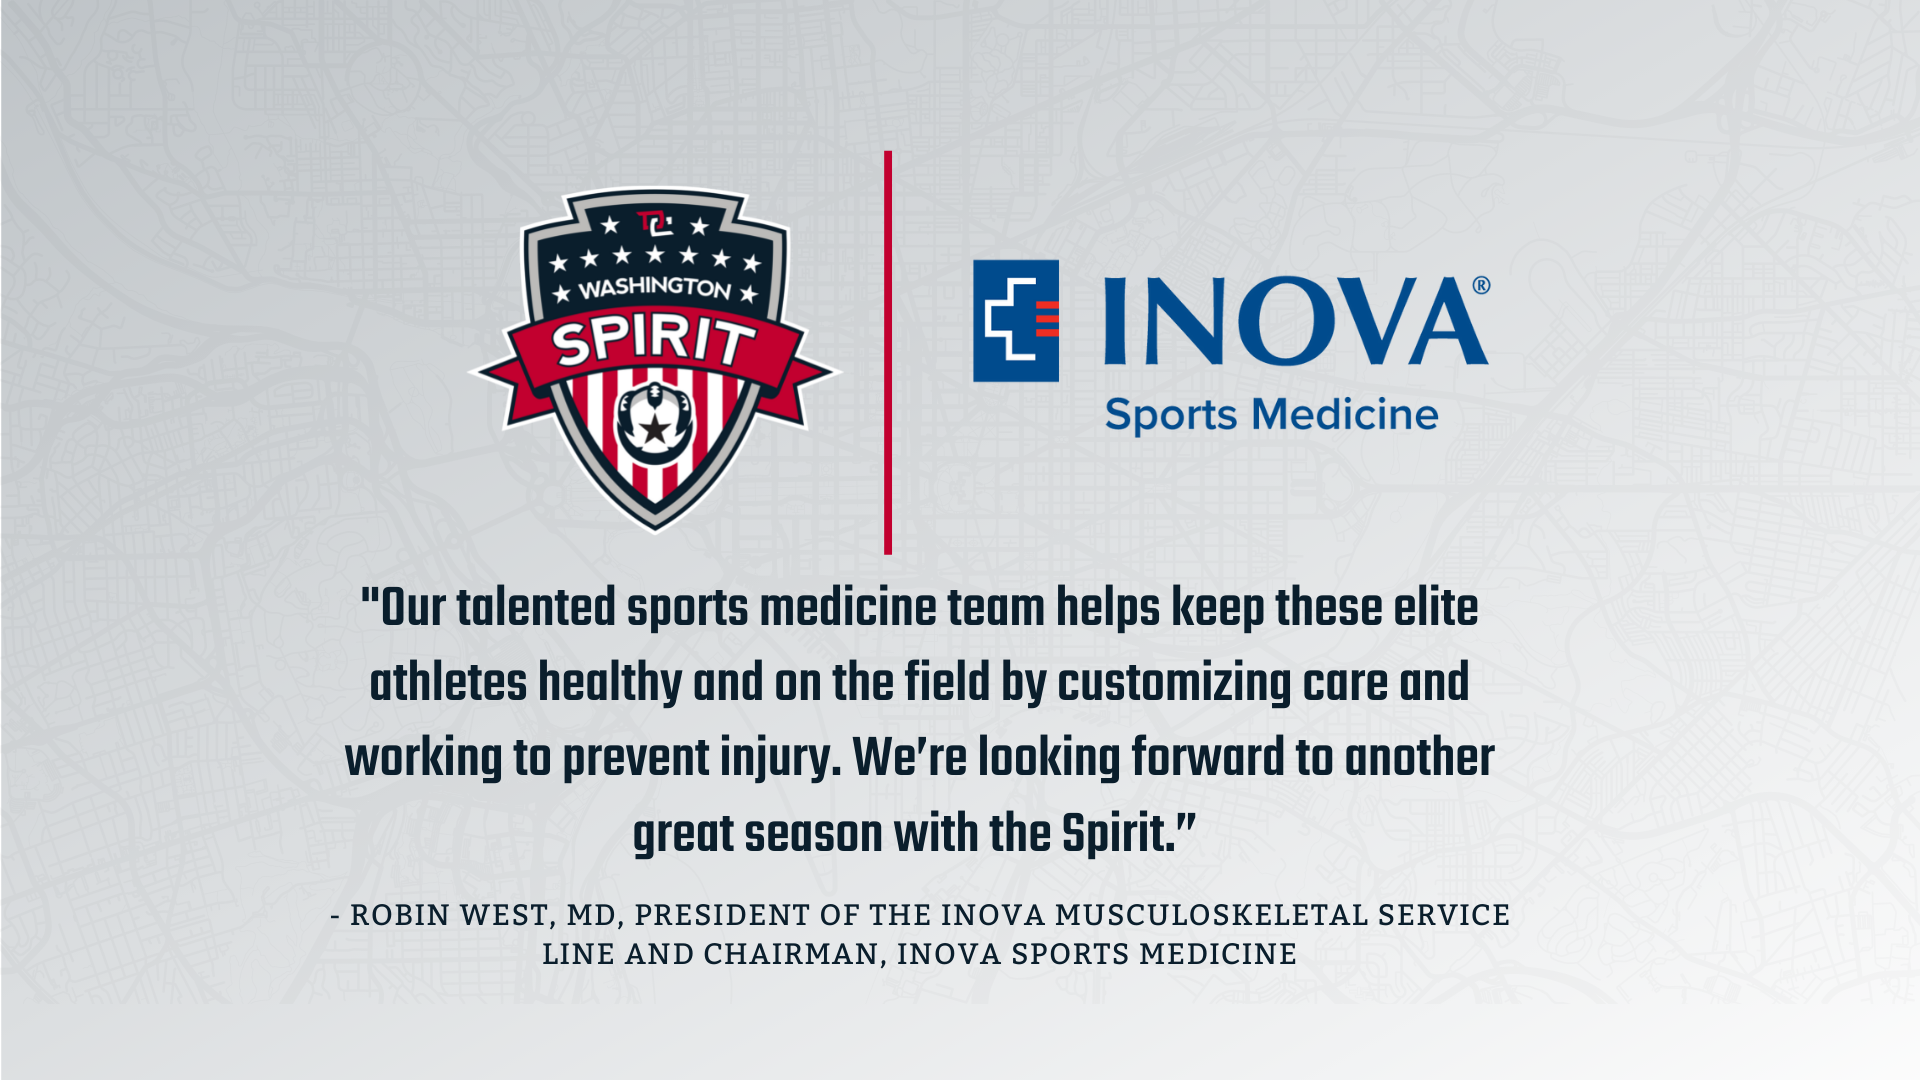 Washington Spirit and Inova Sports Medicine Announce Partnership Renewal for 2021 Featured Image